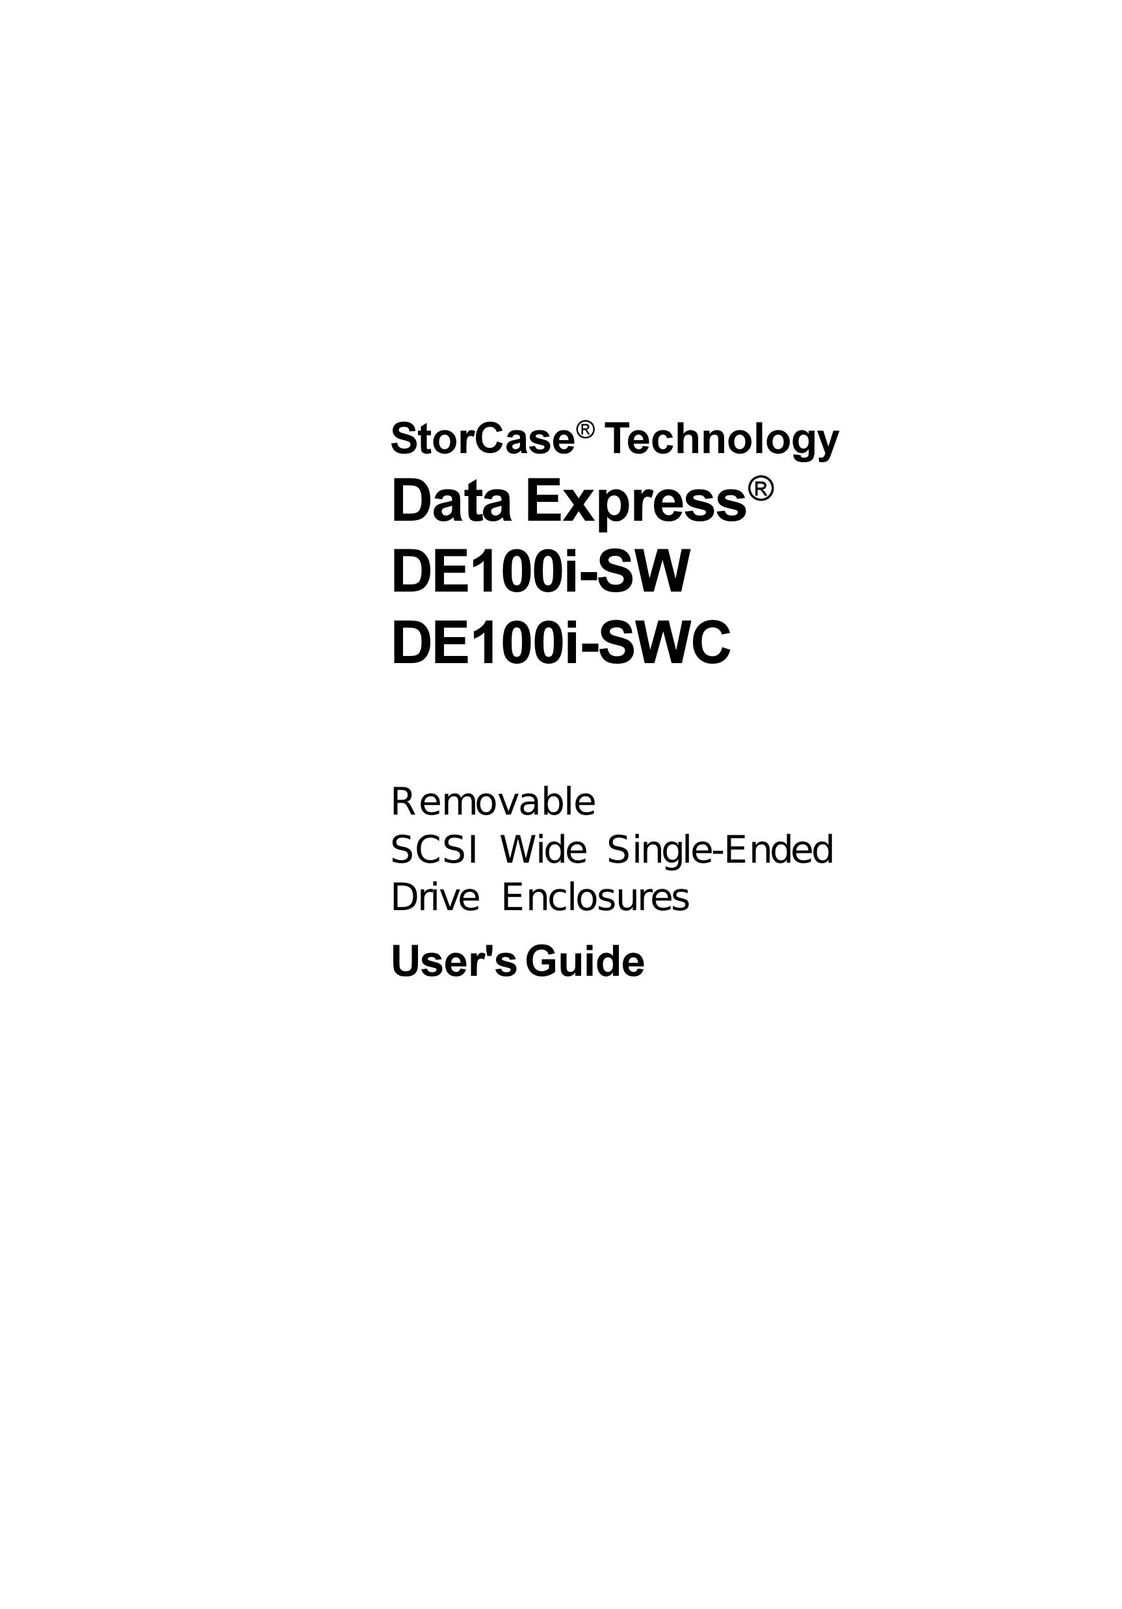 StorCase Technology DE100i-SW Switch User Manual